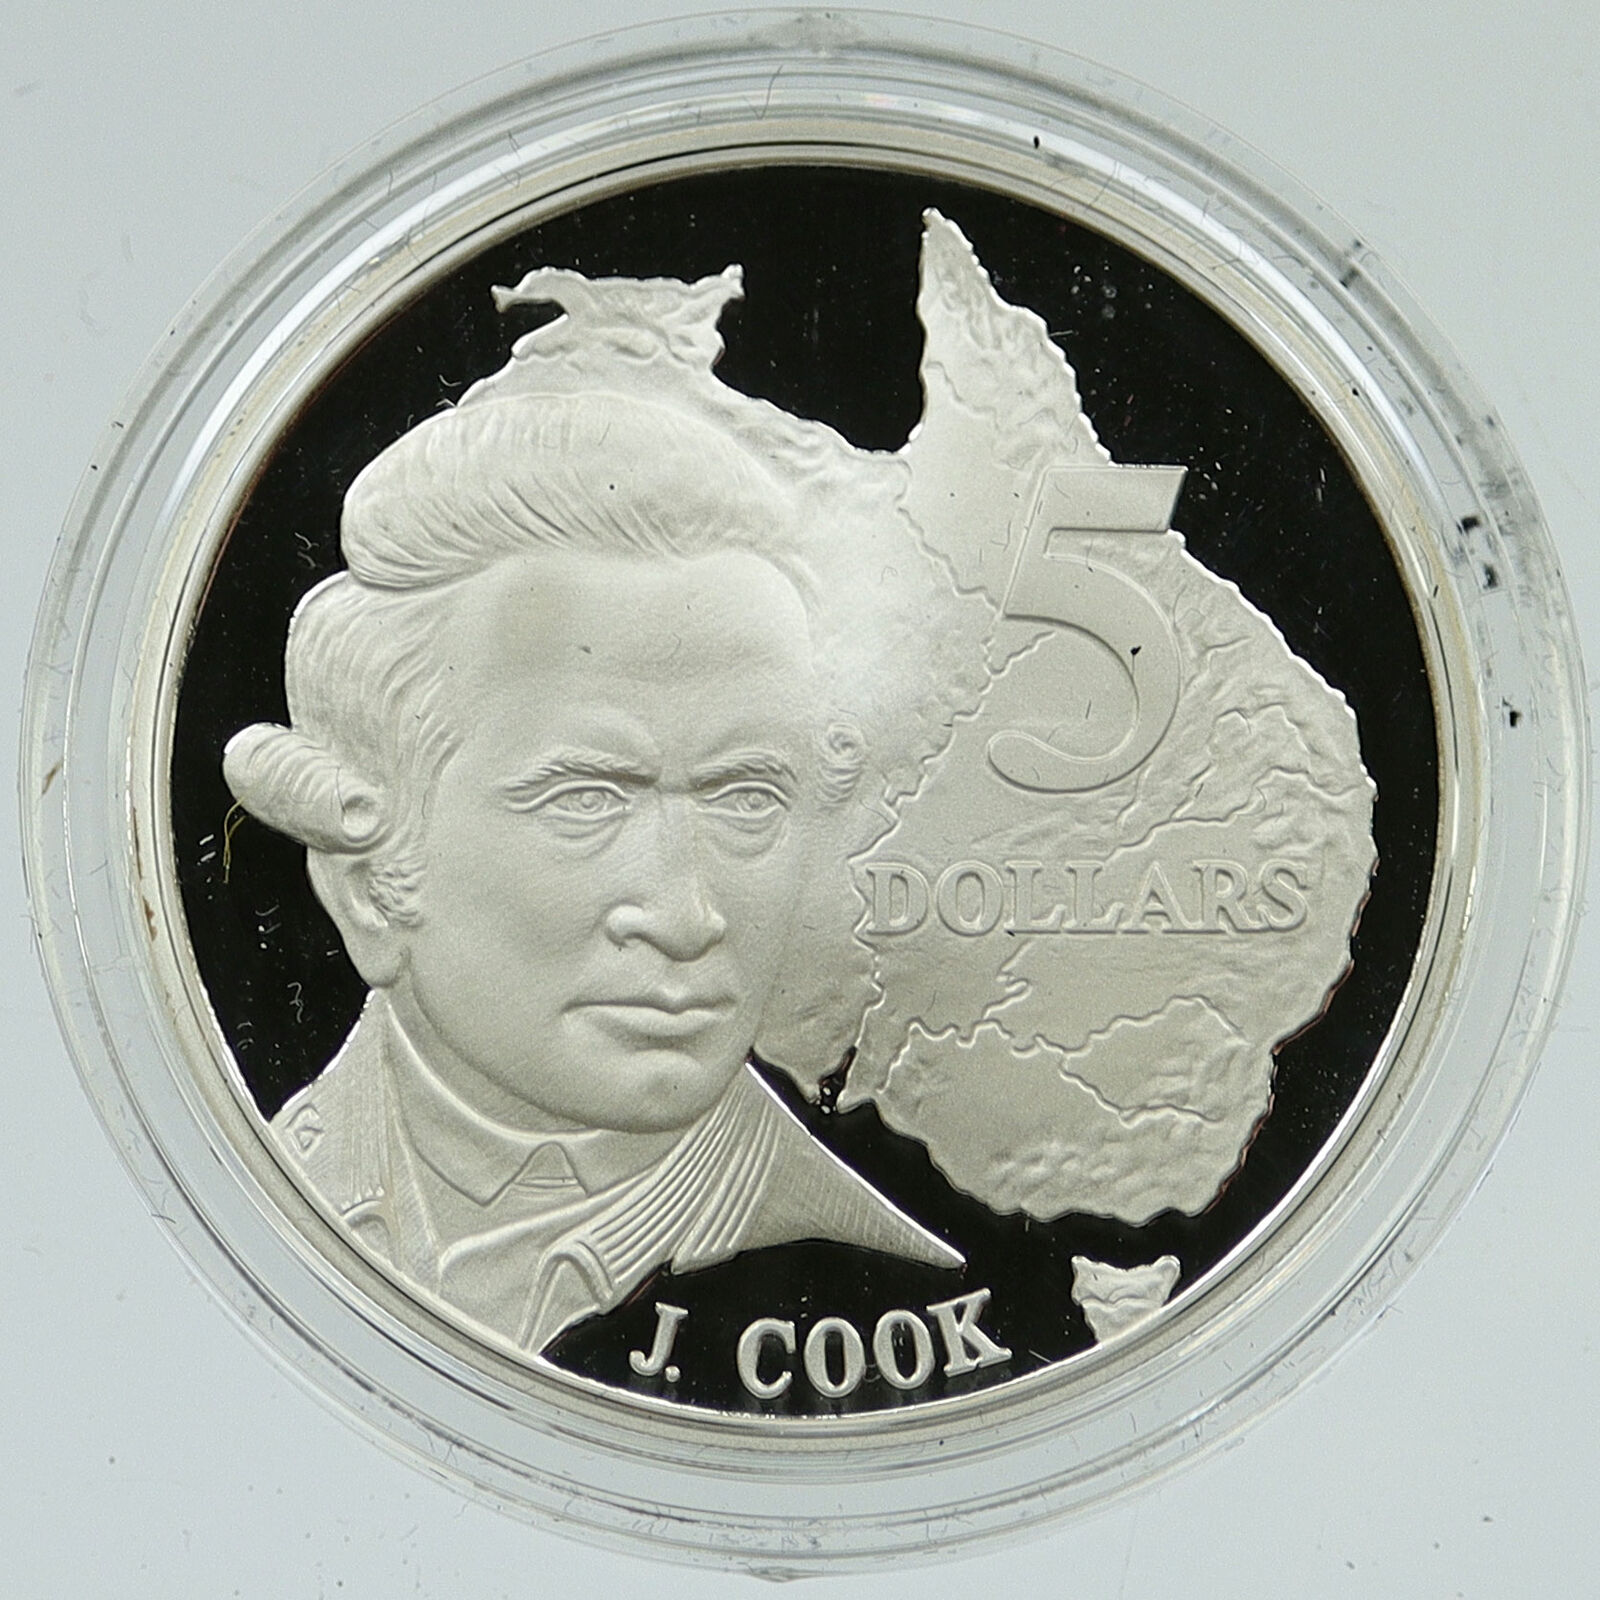 1993 AUSTRALIA UK Elizabeth II James Cook Explorer Proof Silver $5 Coin i116592